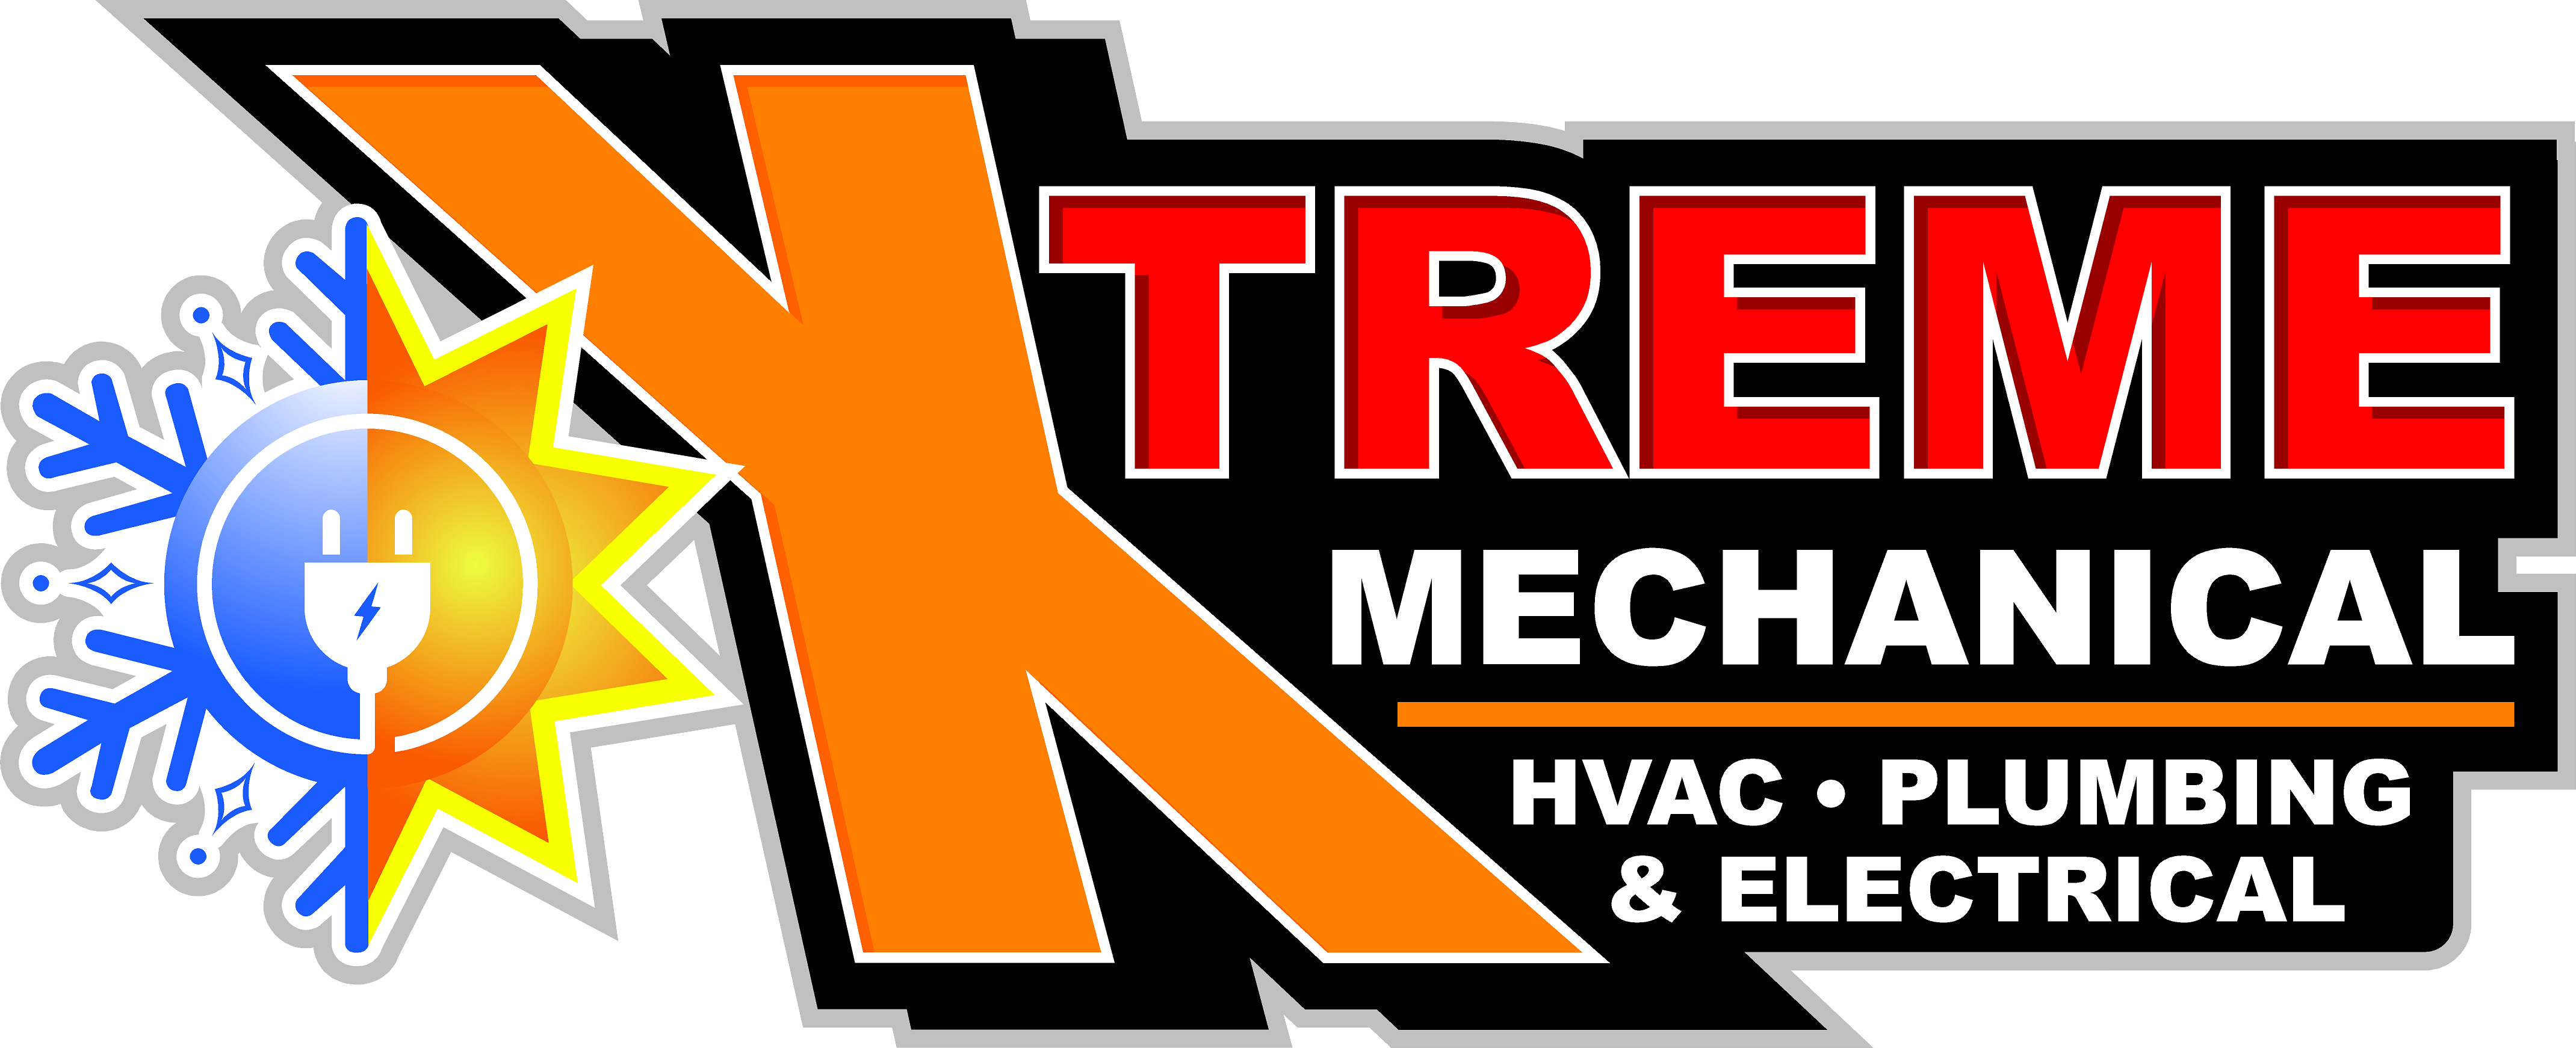 Xtreme Mechanical logo in Telford PA